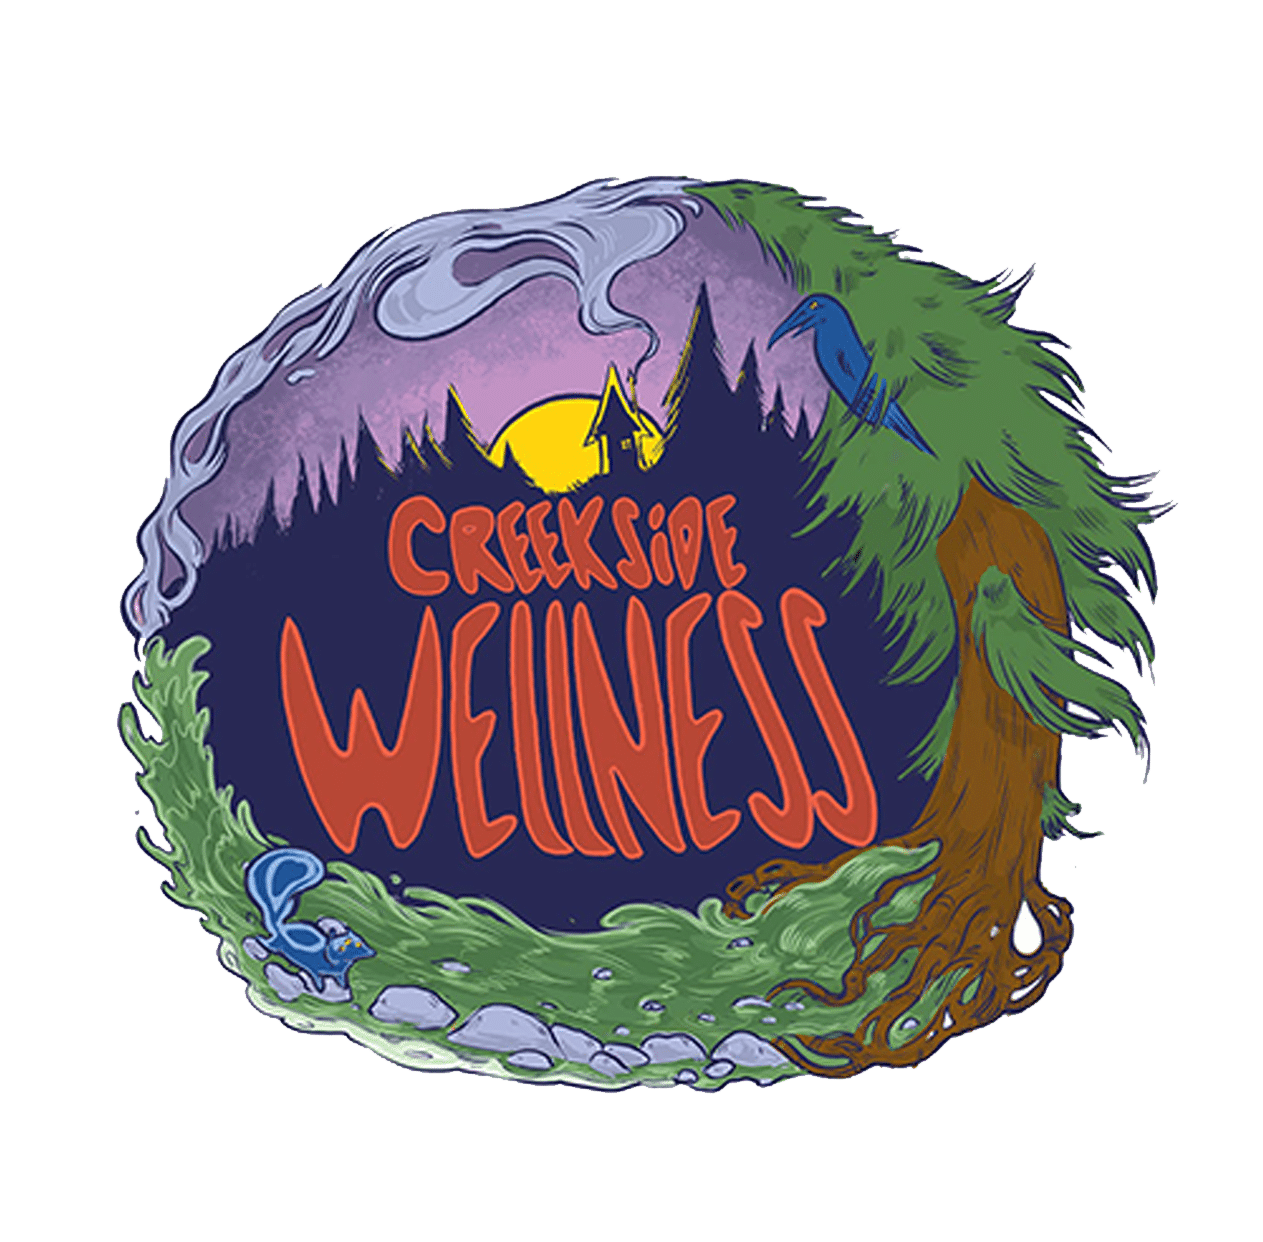 Creekside Wellness dispensary Logo - round colorful nature scene at night